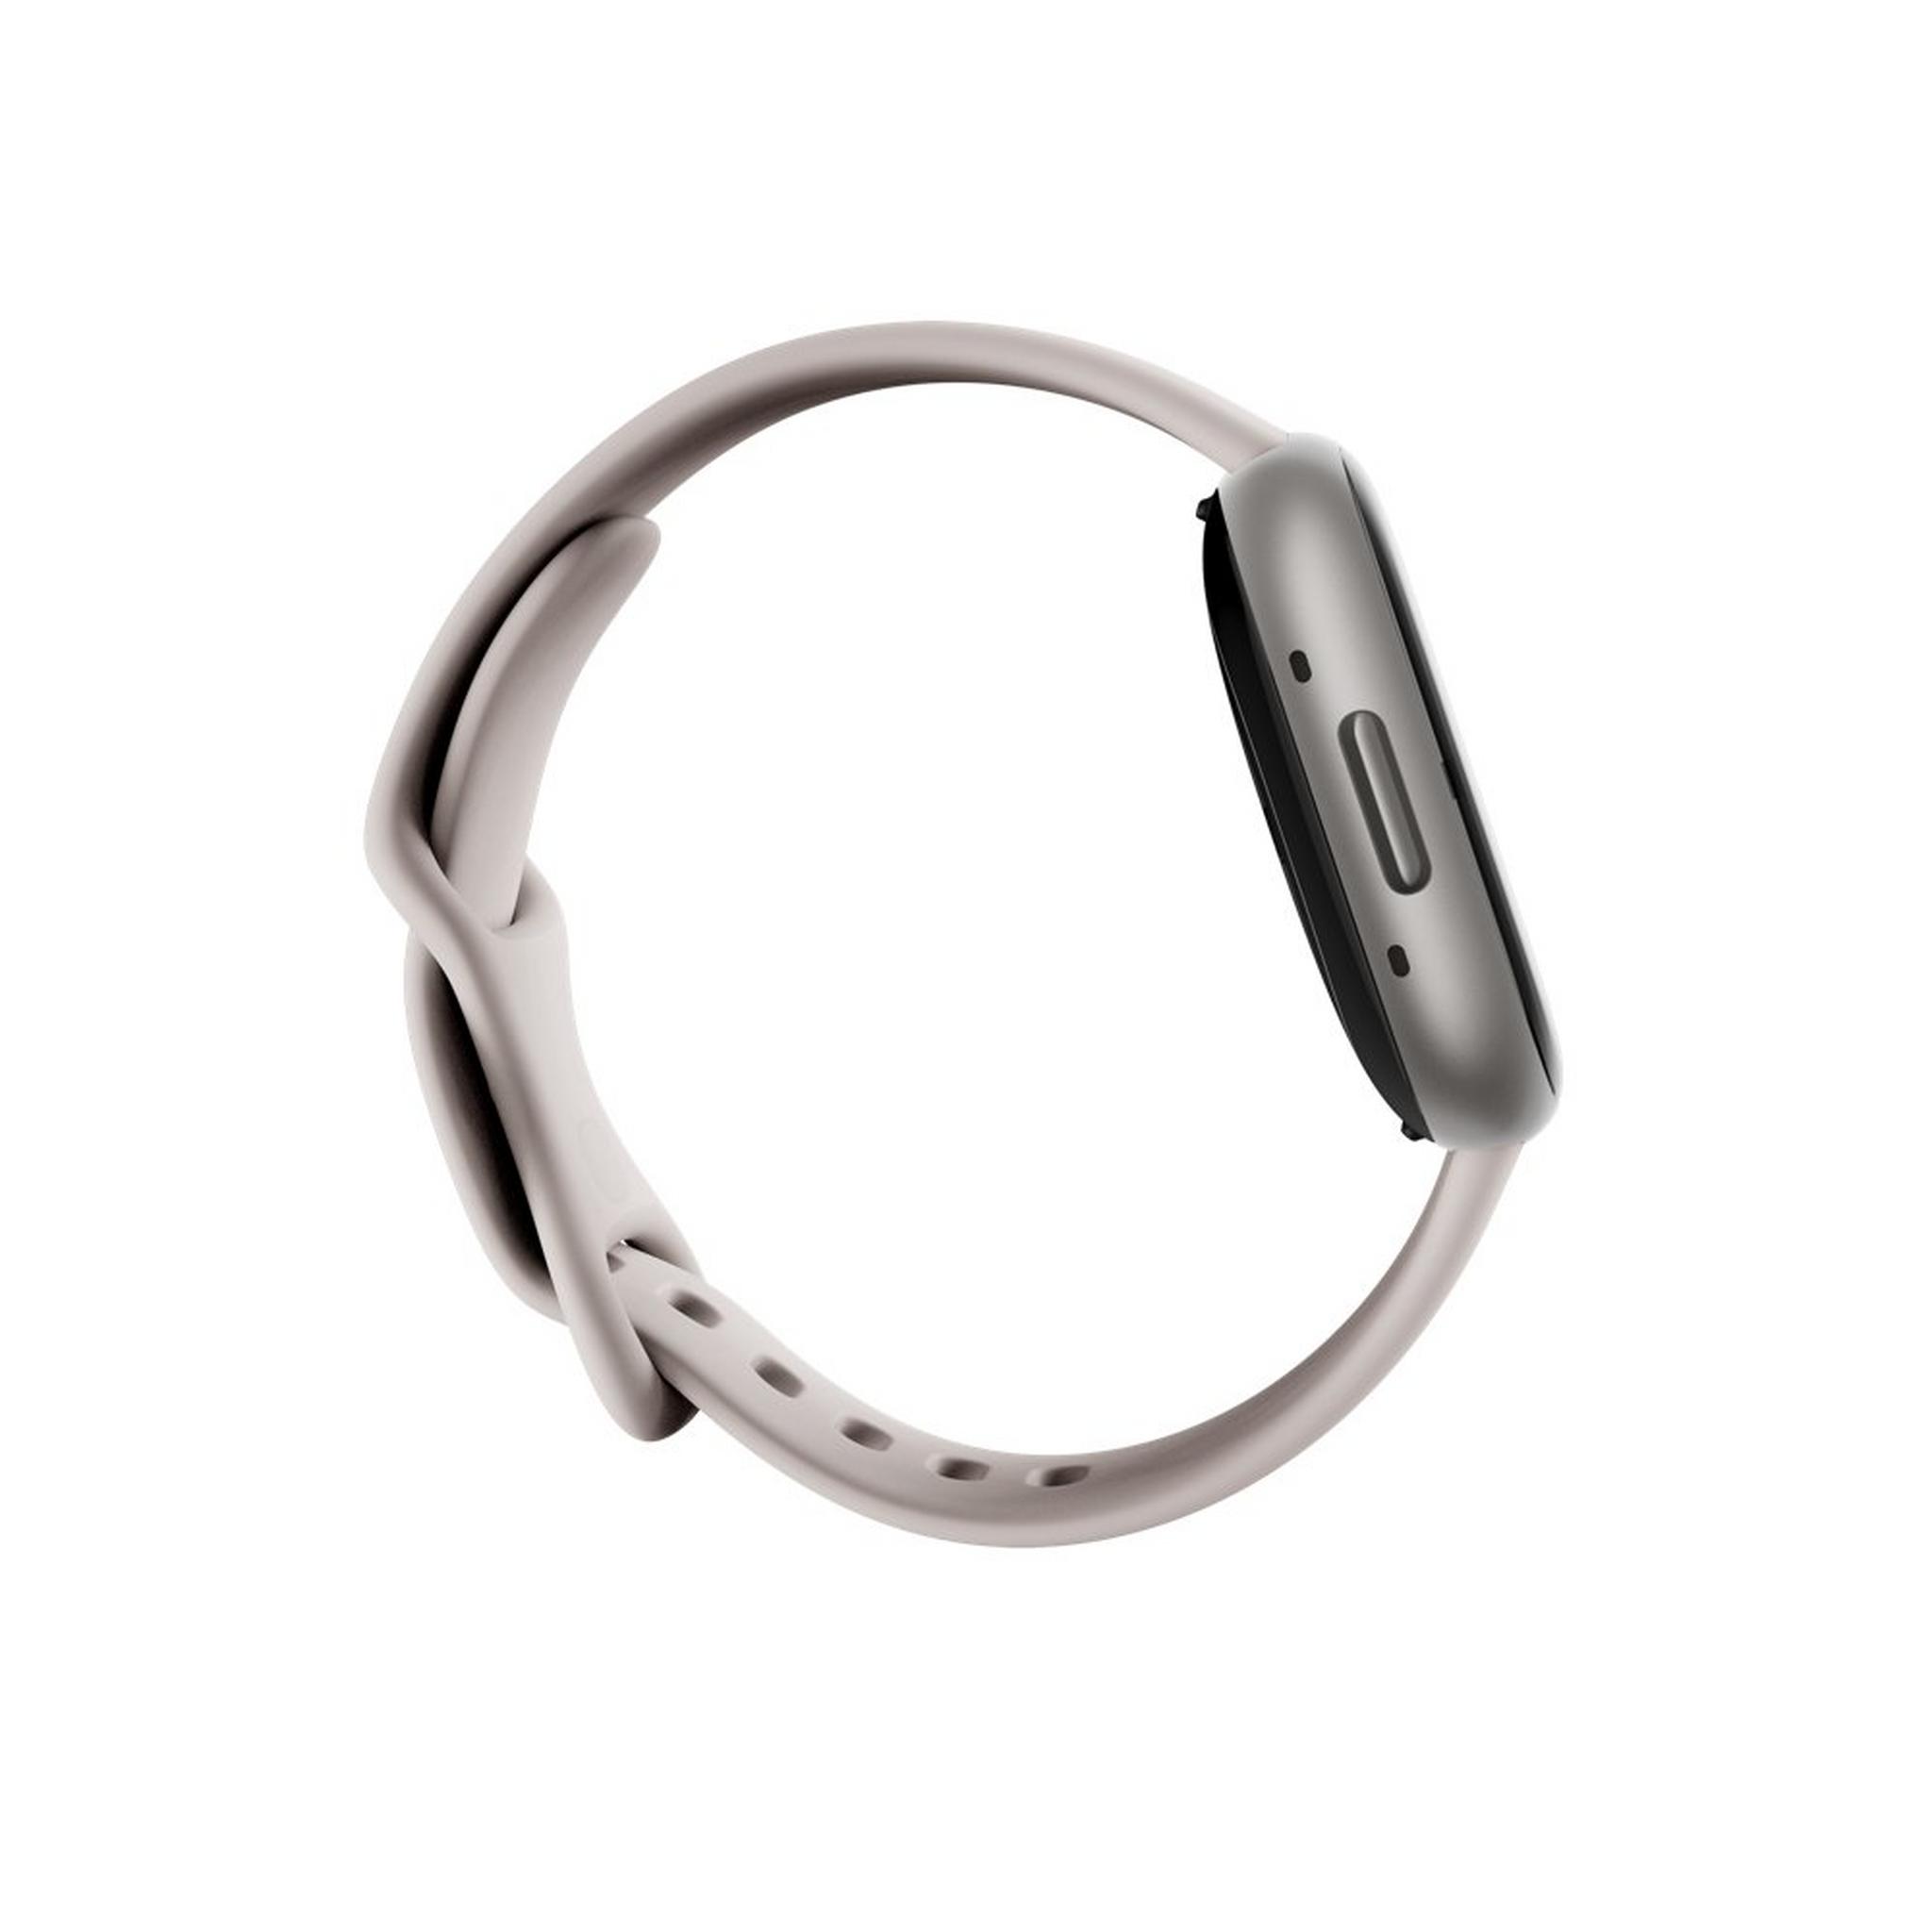 Fitbit Sense 2 Smart Watch - Lunar White / Platinum